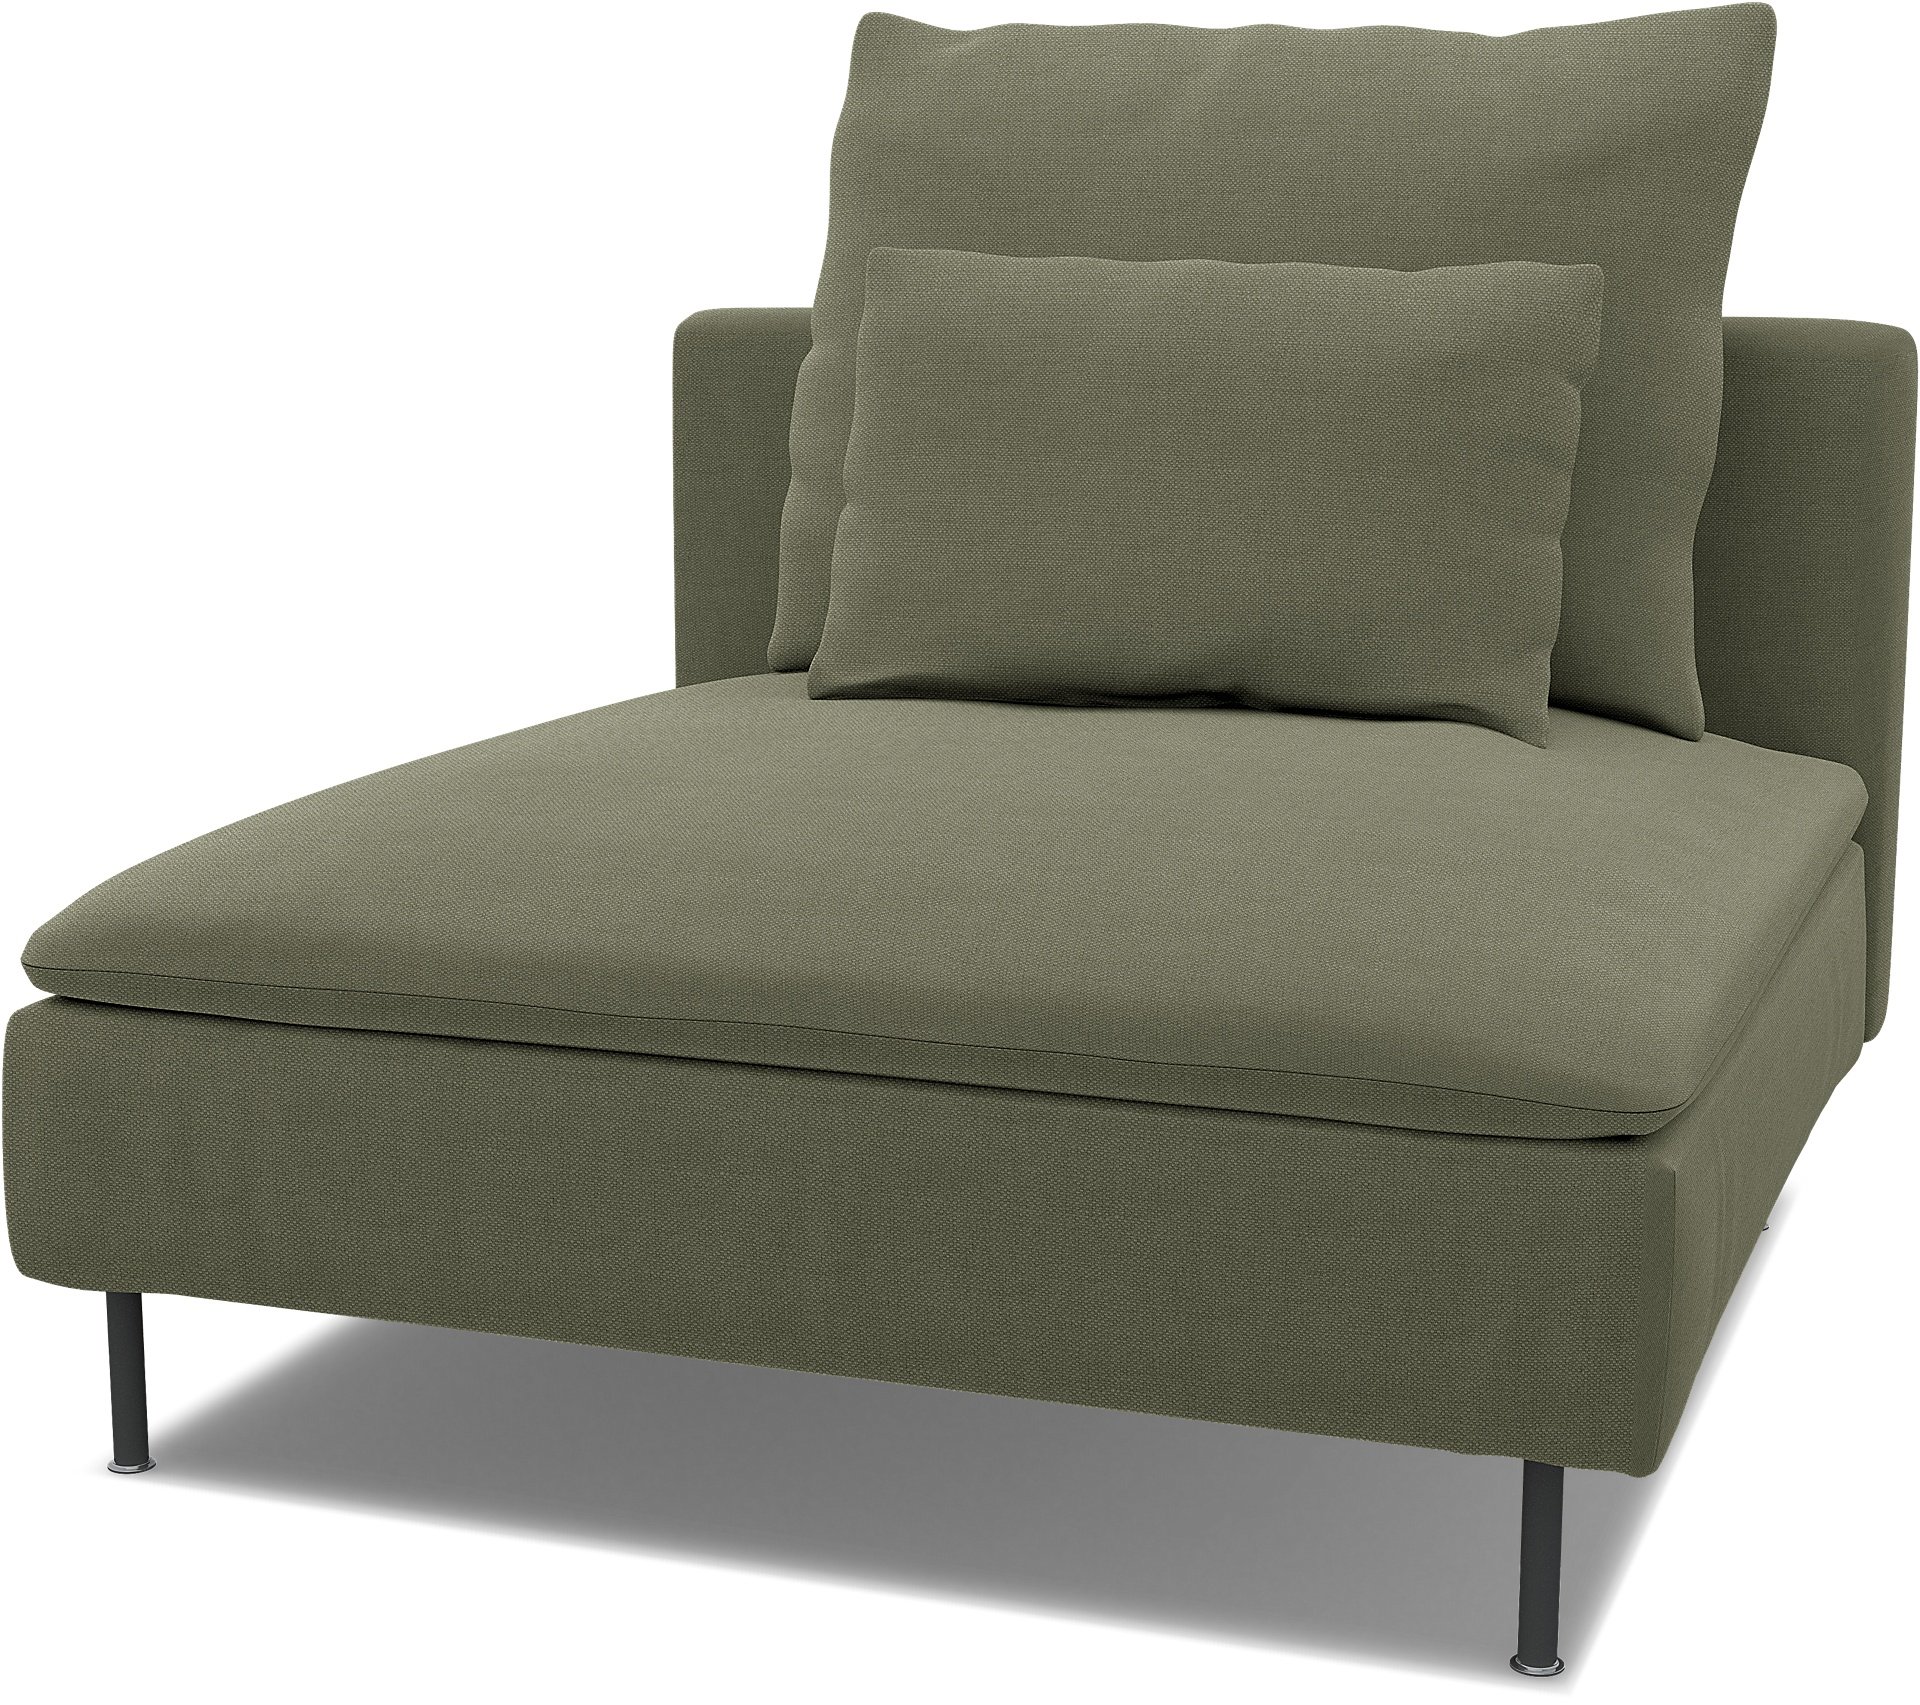 Spare back cushion cover for SODERHAMN 1 SEAT SECTION, Sage, Linen - Bemz